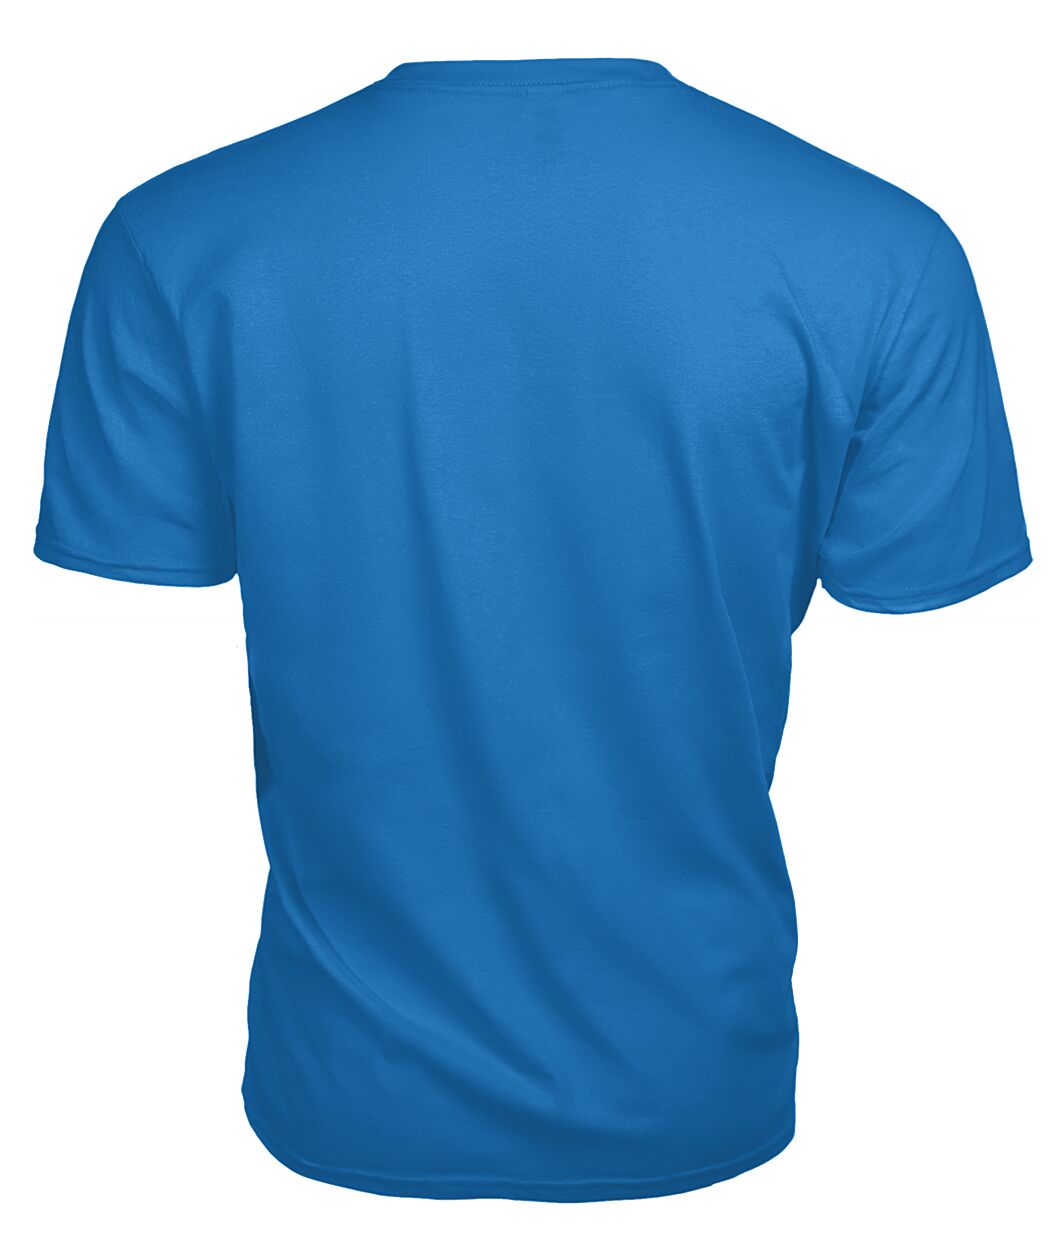 Sandilands Family Tartan - 2D T-shirt